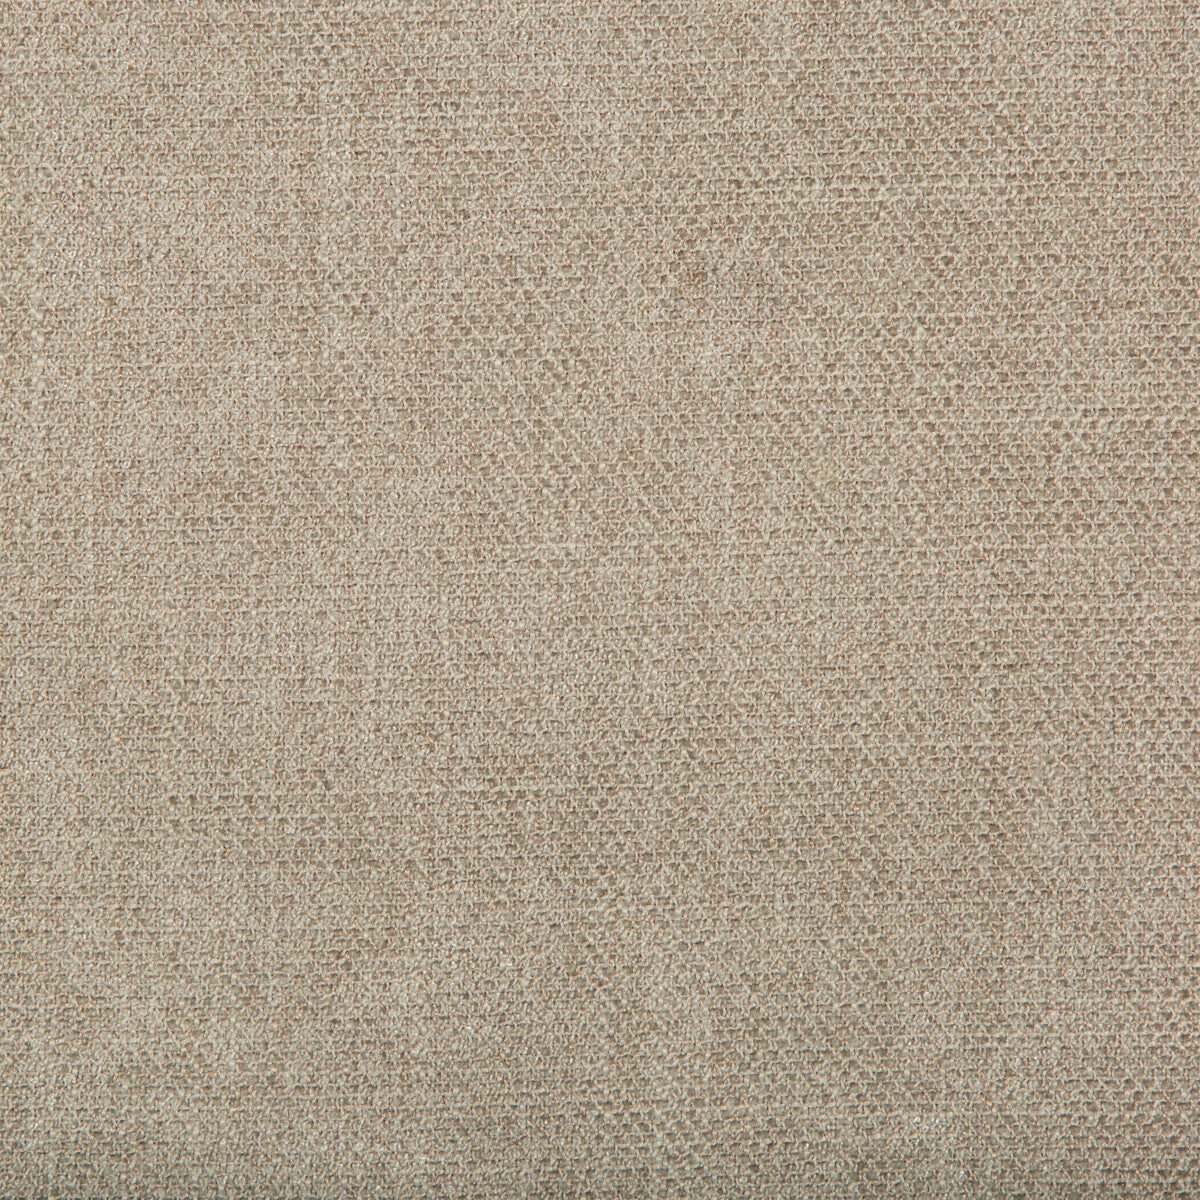 Kf Smt fabric - pattern 35060.11.0 - by Kravet Smart in the Performance Kravetarmor collection